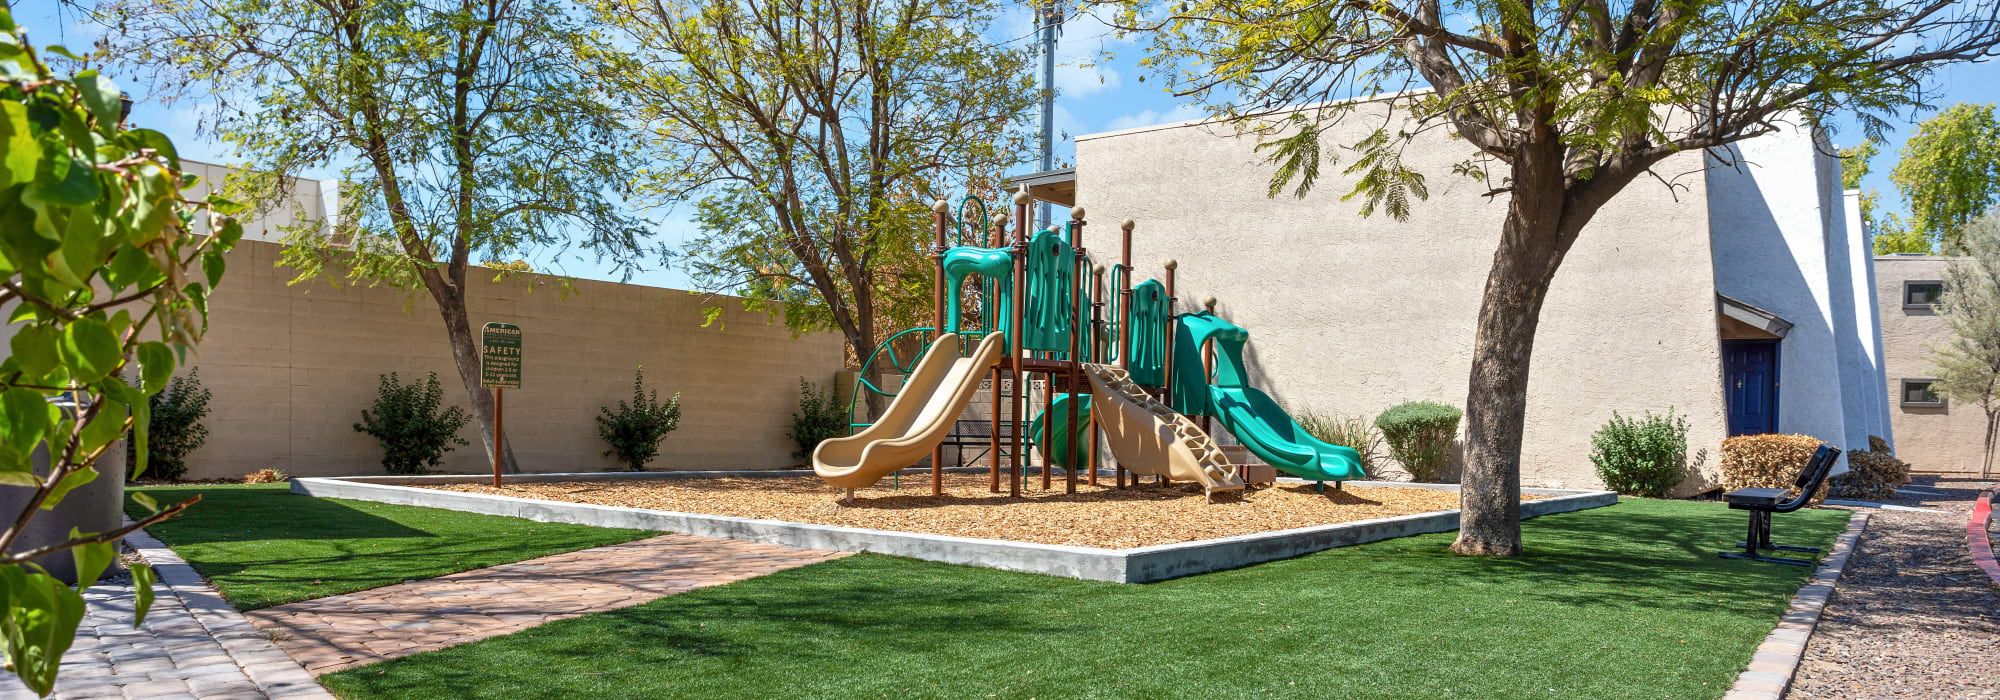 Community playground at 1408 Casitas at Palm Valley in Avondale, Arizona